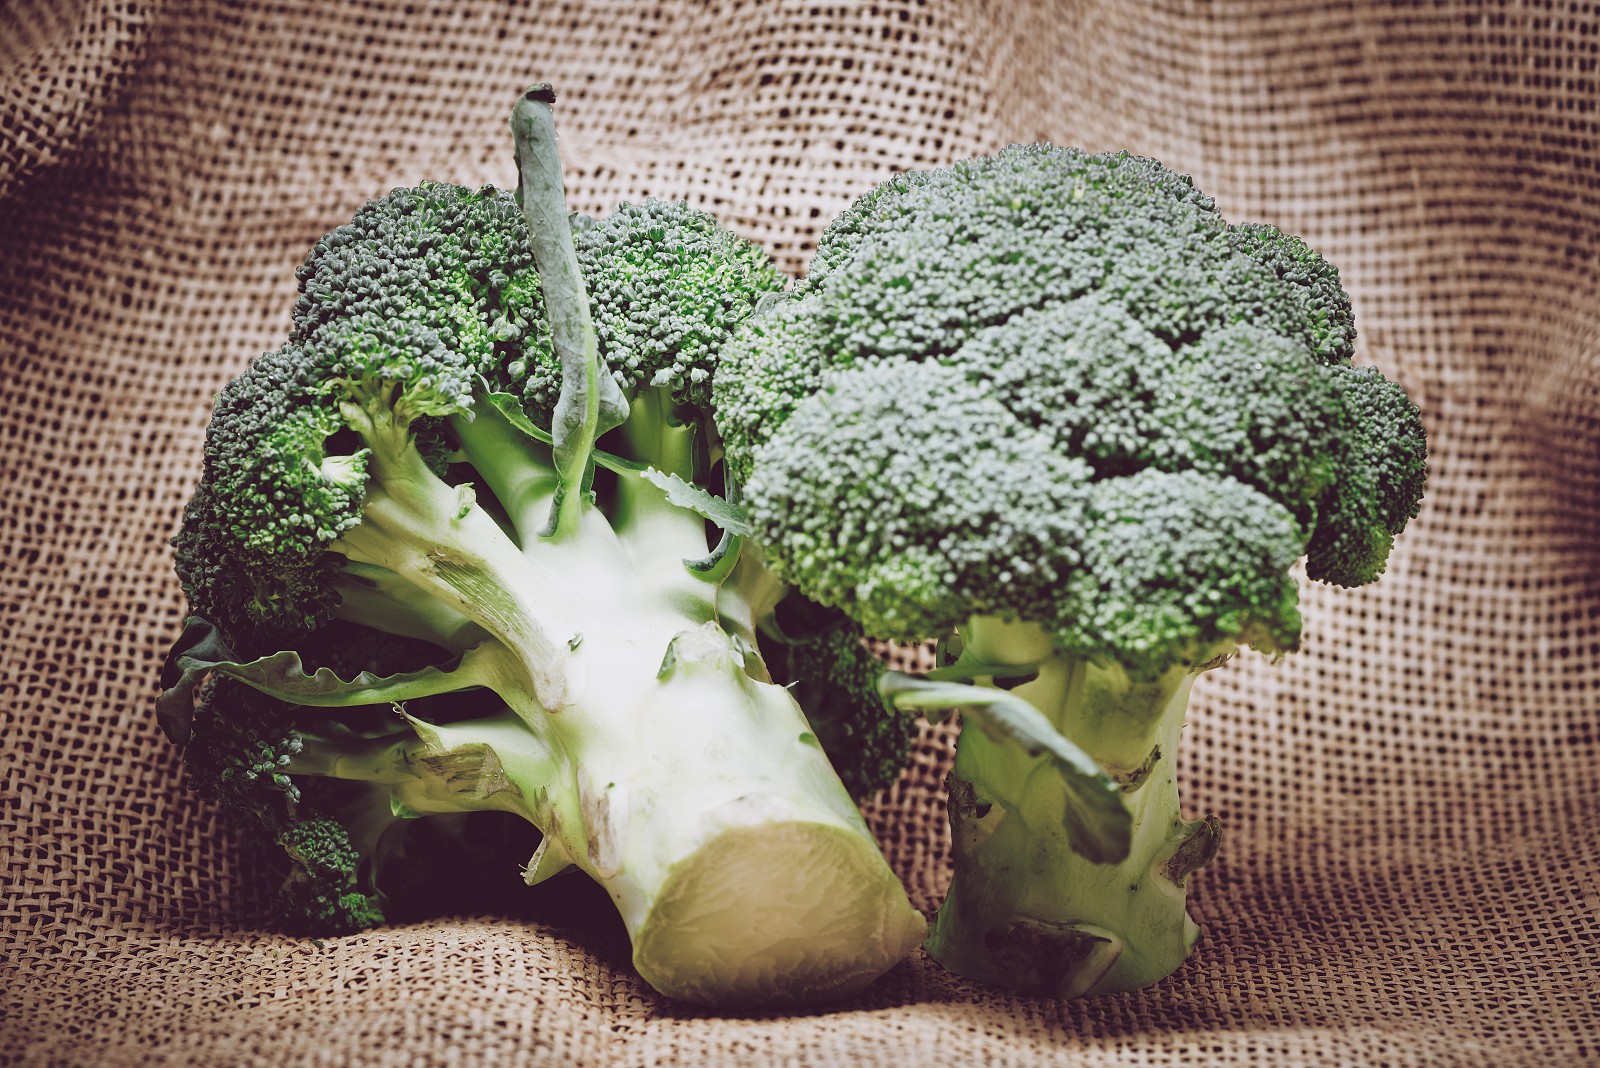 agriculture-broccoli-close-up-close-up-399629.jpg